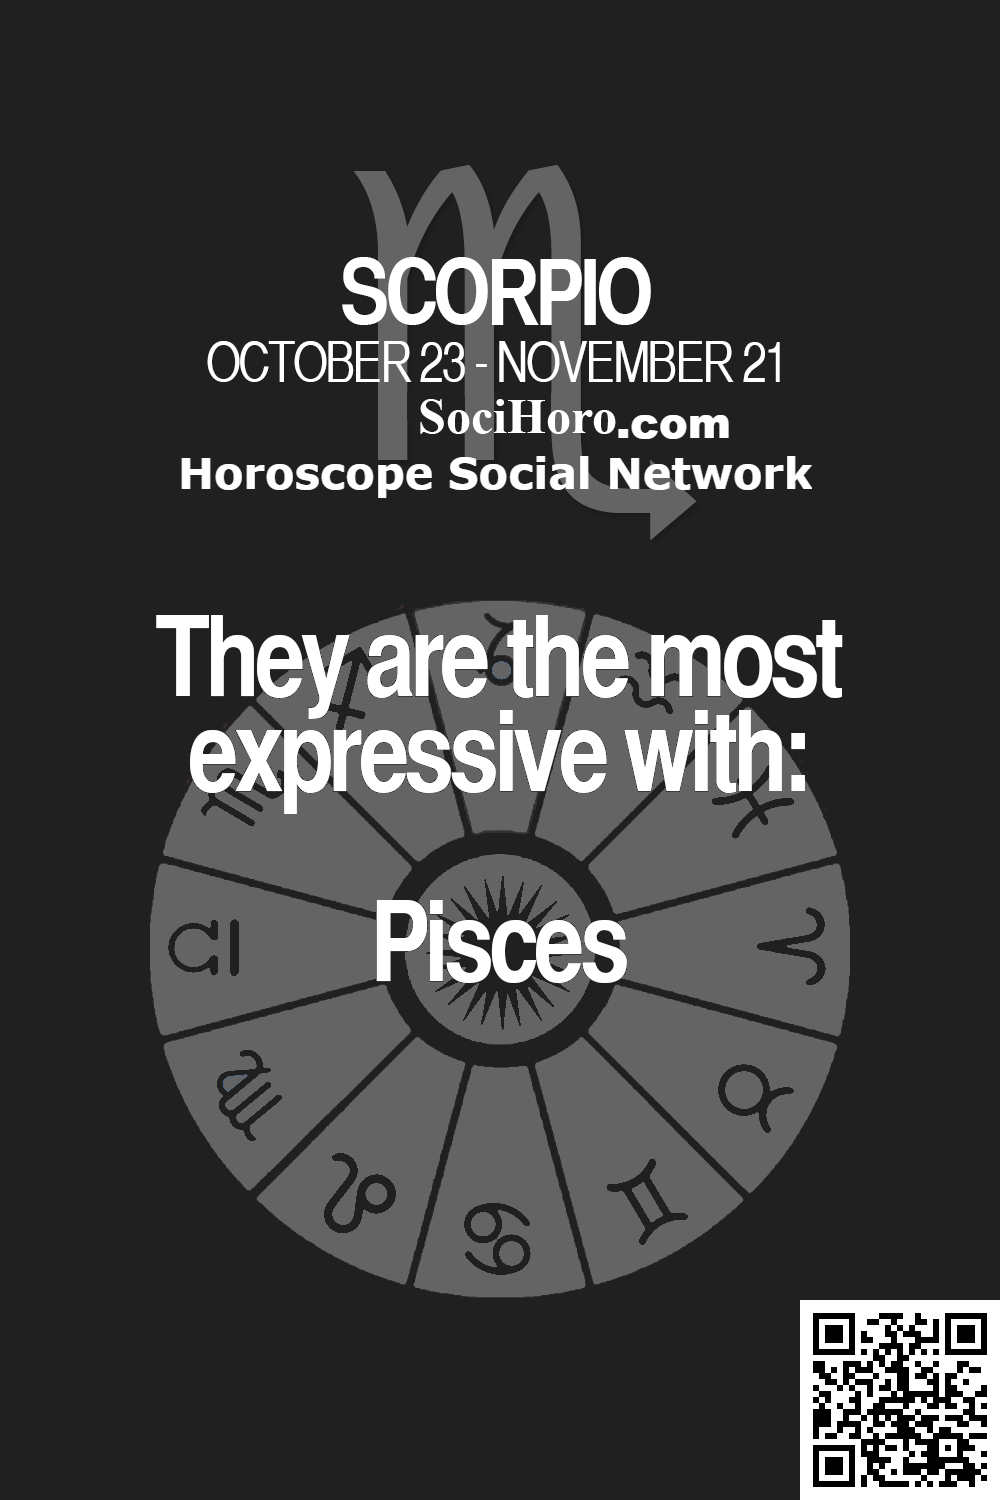 Scorpio - Quotes - Zodiac - SociHoro - Horoscope Social Network